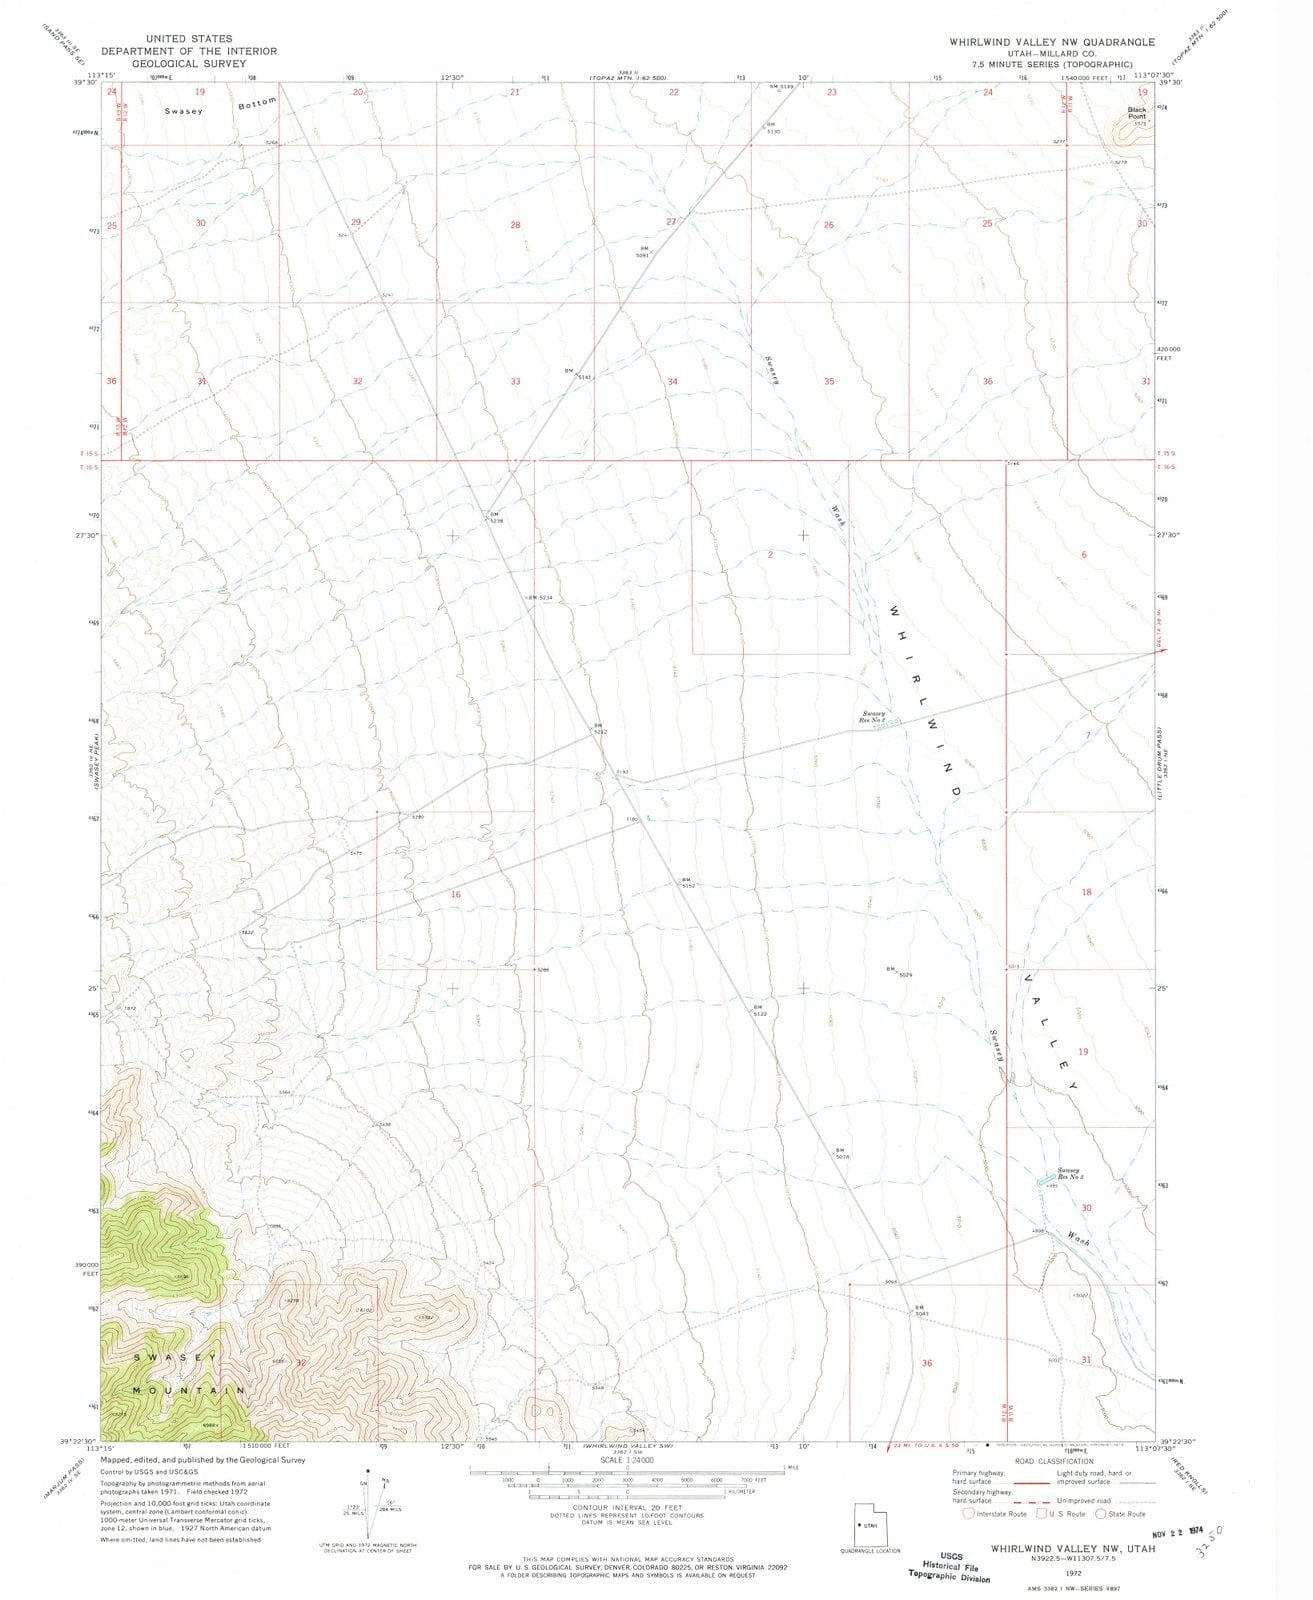 1972 Whirlwind Valley, UT - Utah - USGS Topographic Map